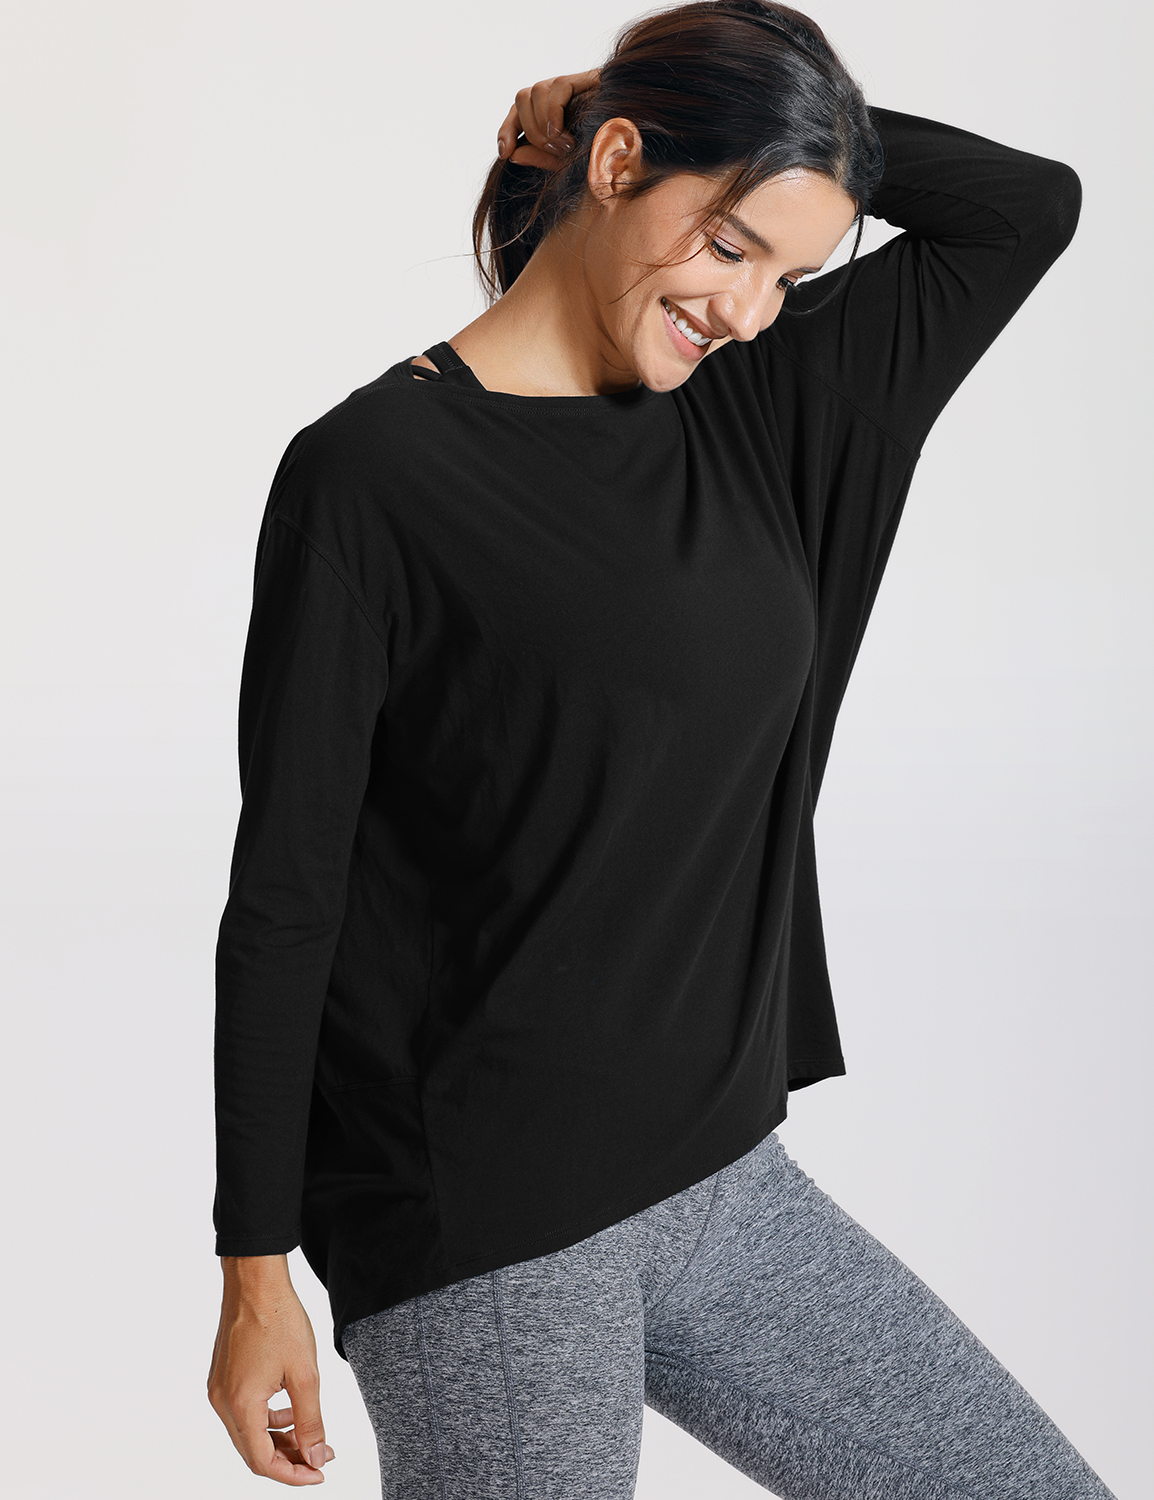 Women's Long Sleeve Yoga Tops & Shirts